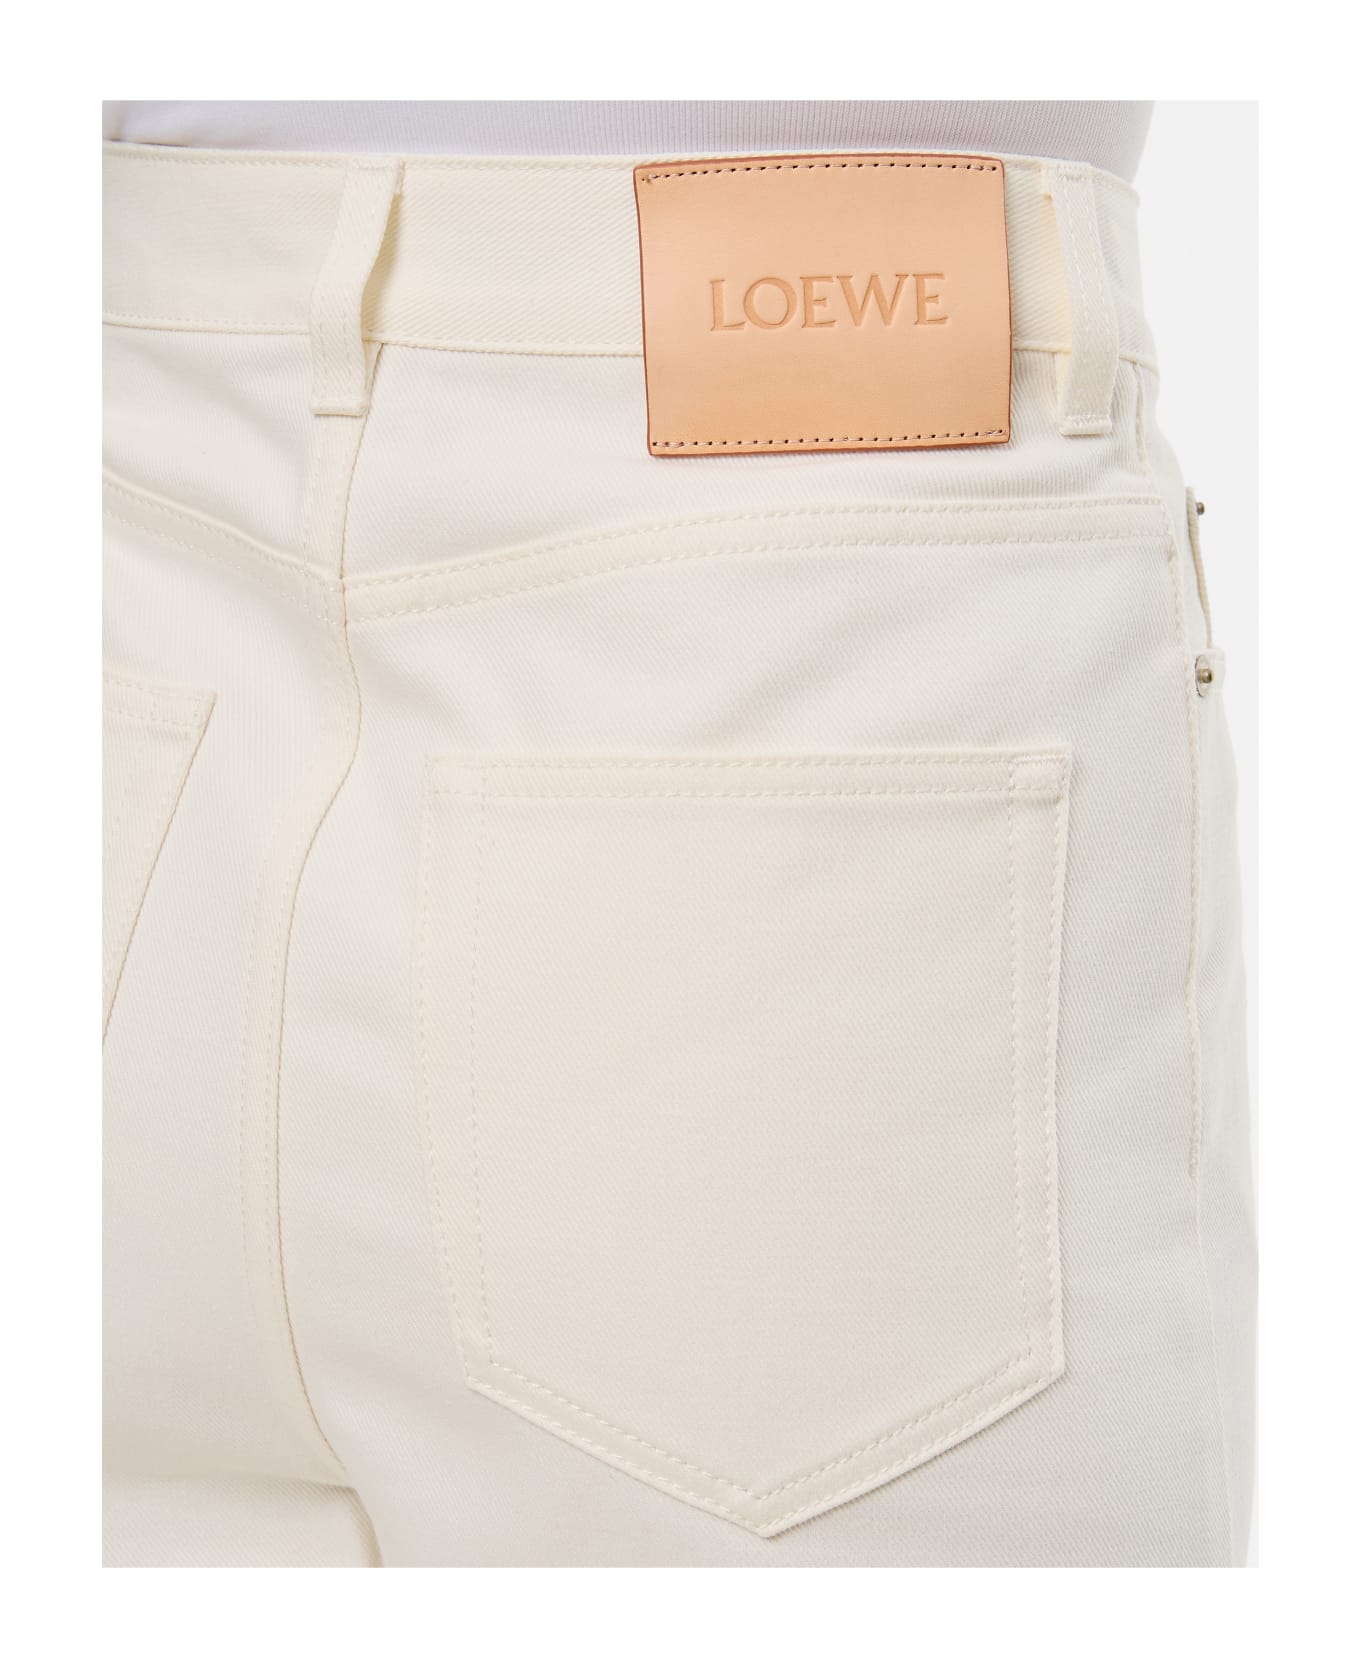 Loewe High Waisted Jeans - White ボトムス